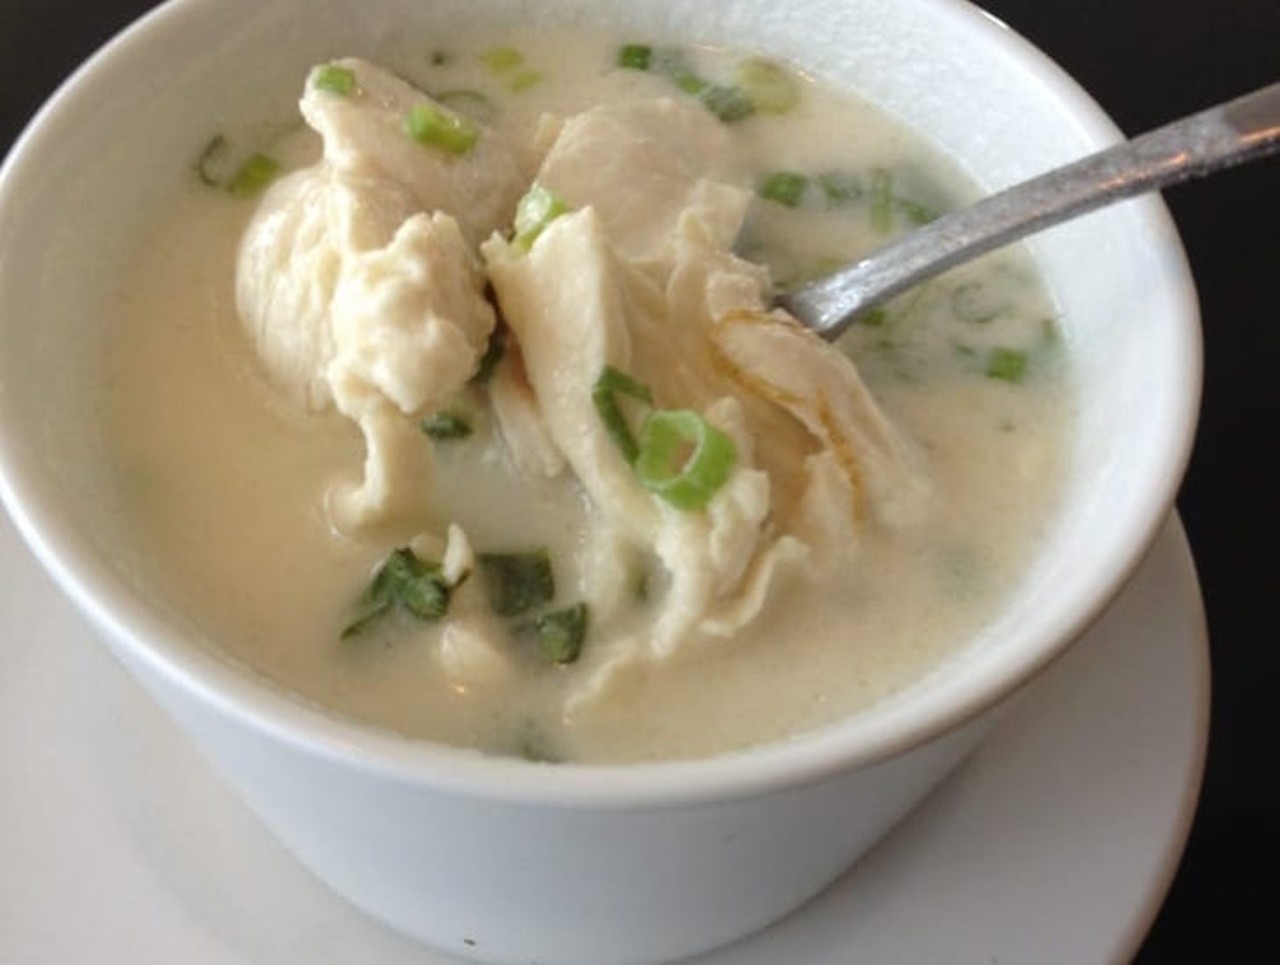 Tom kha gai: coconut chicken soup
Thai Cuisine, 5325 Edgewater Drive
Photo via Yelp